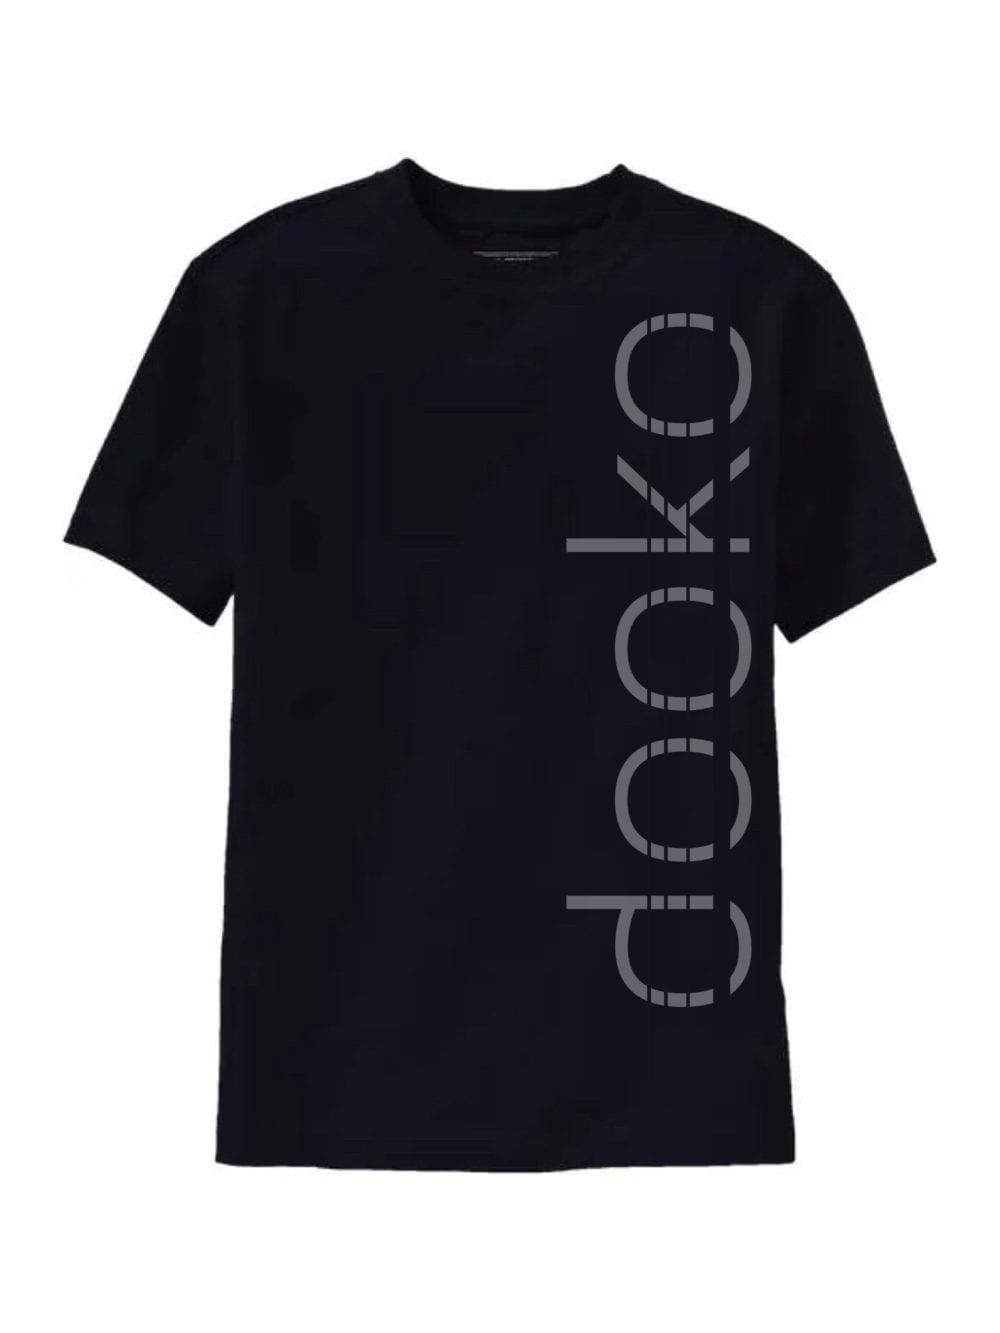 dooko shirt with stripes through logo